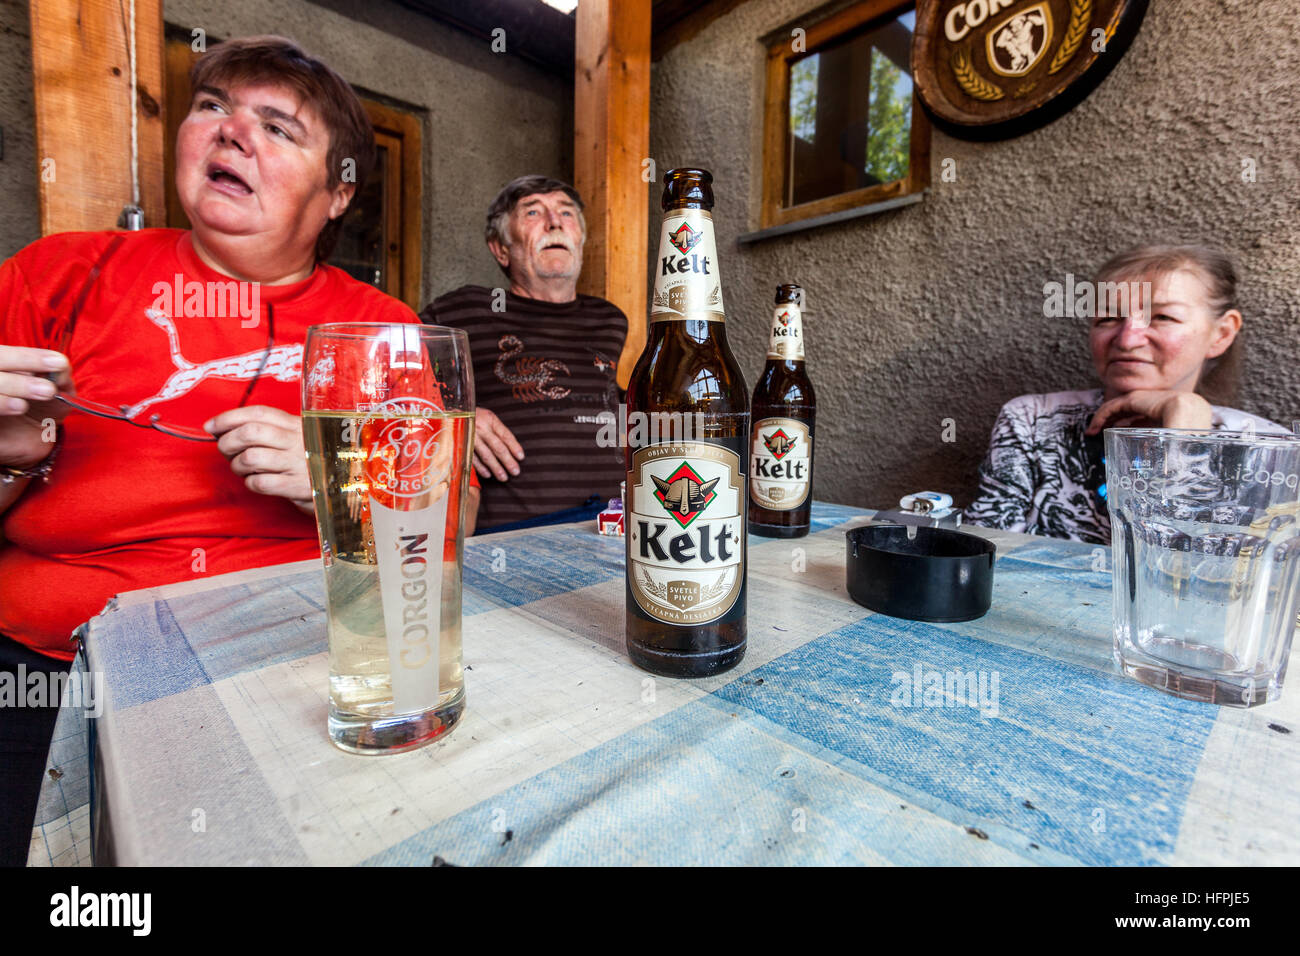 seniors, Elderly people drinking beer Kelt, Slovakia old friends drink Stock Photo